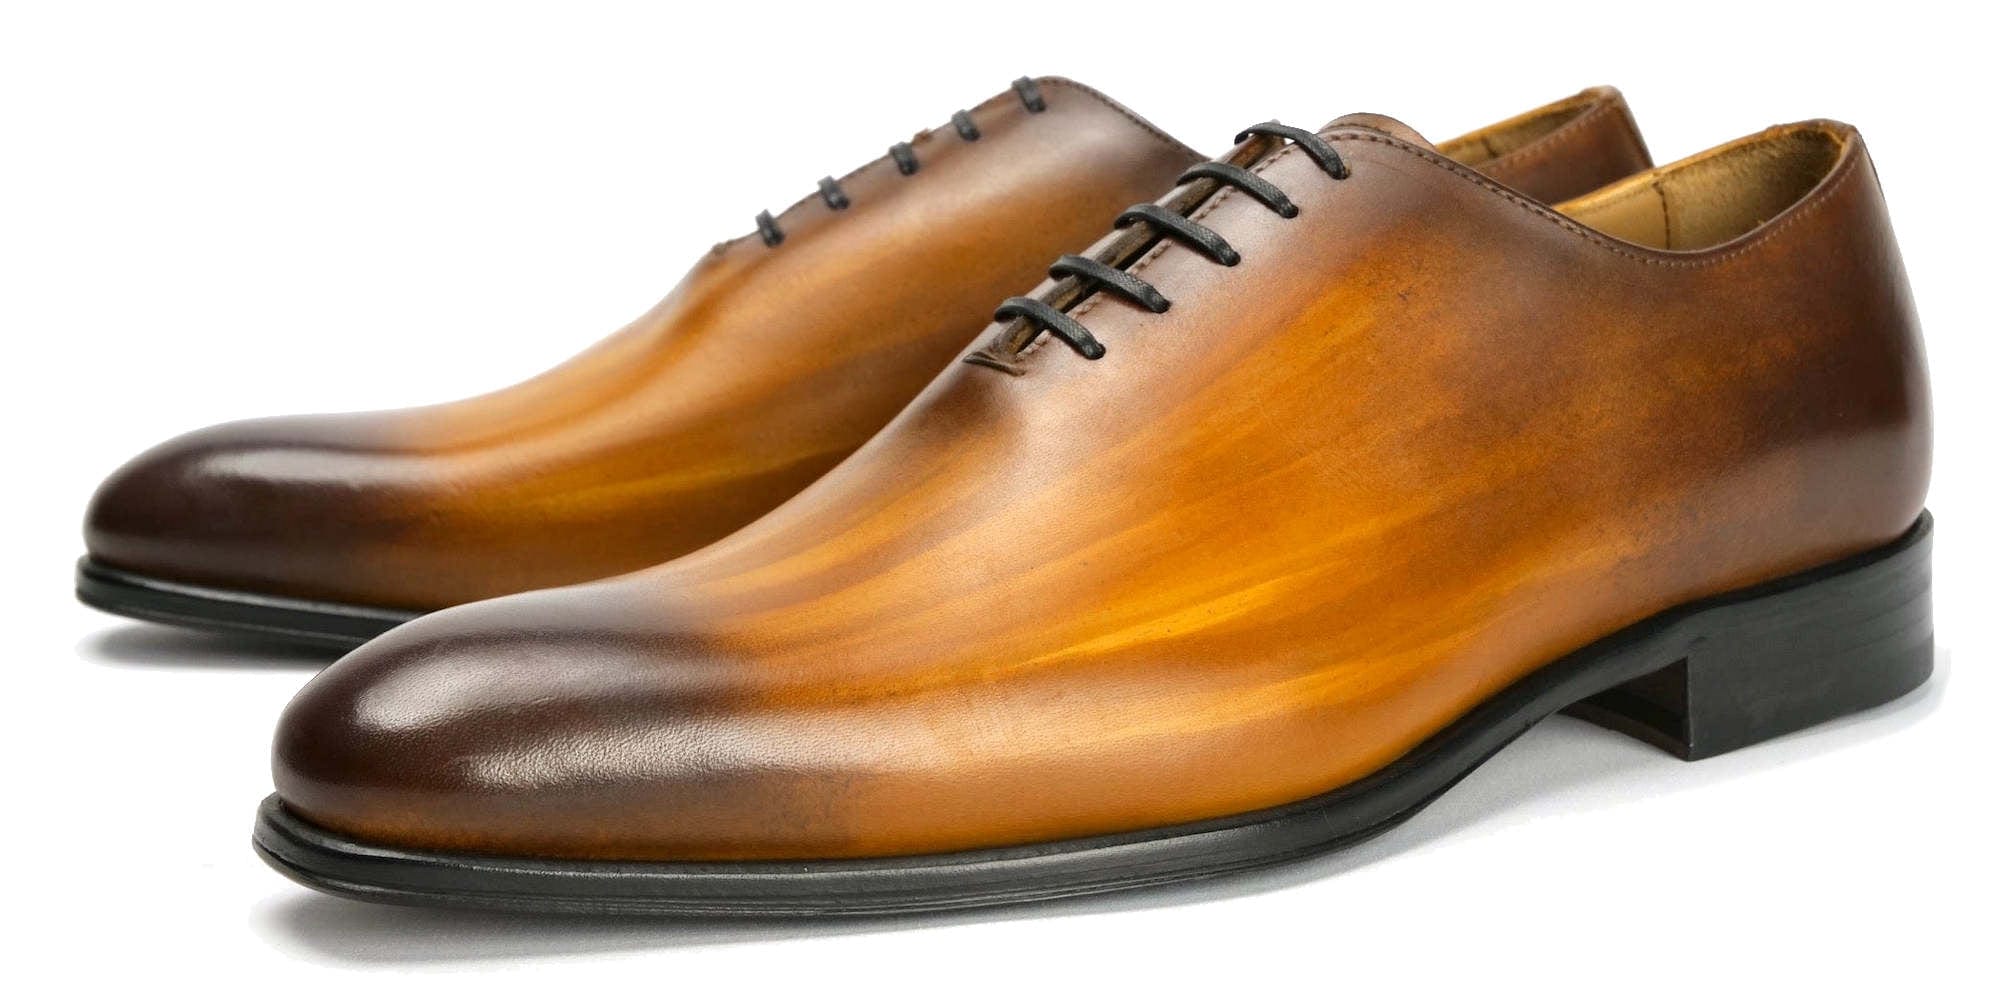 Buy Chelsea Boot - Cognac Suede Colour for Men Online UK 12 / US 13 / EUR 46 / Cognac Suede